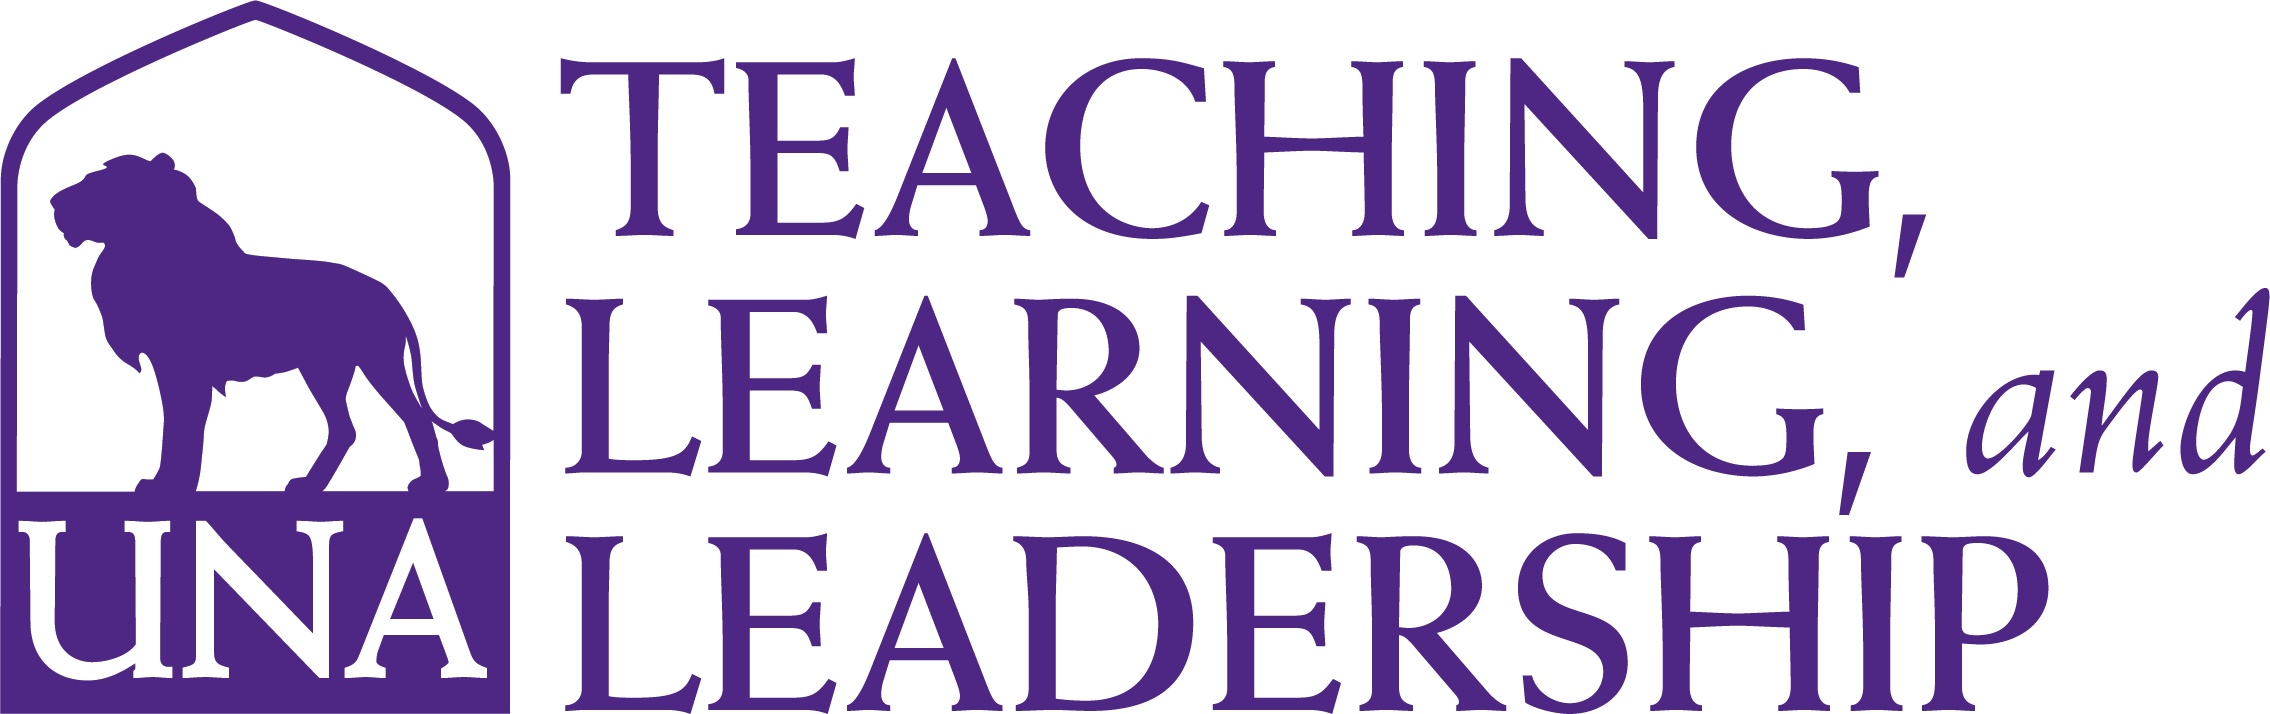 teaching learning leadership logo 3